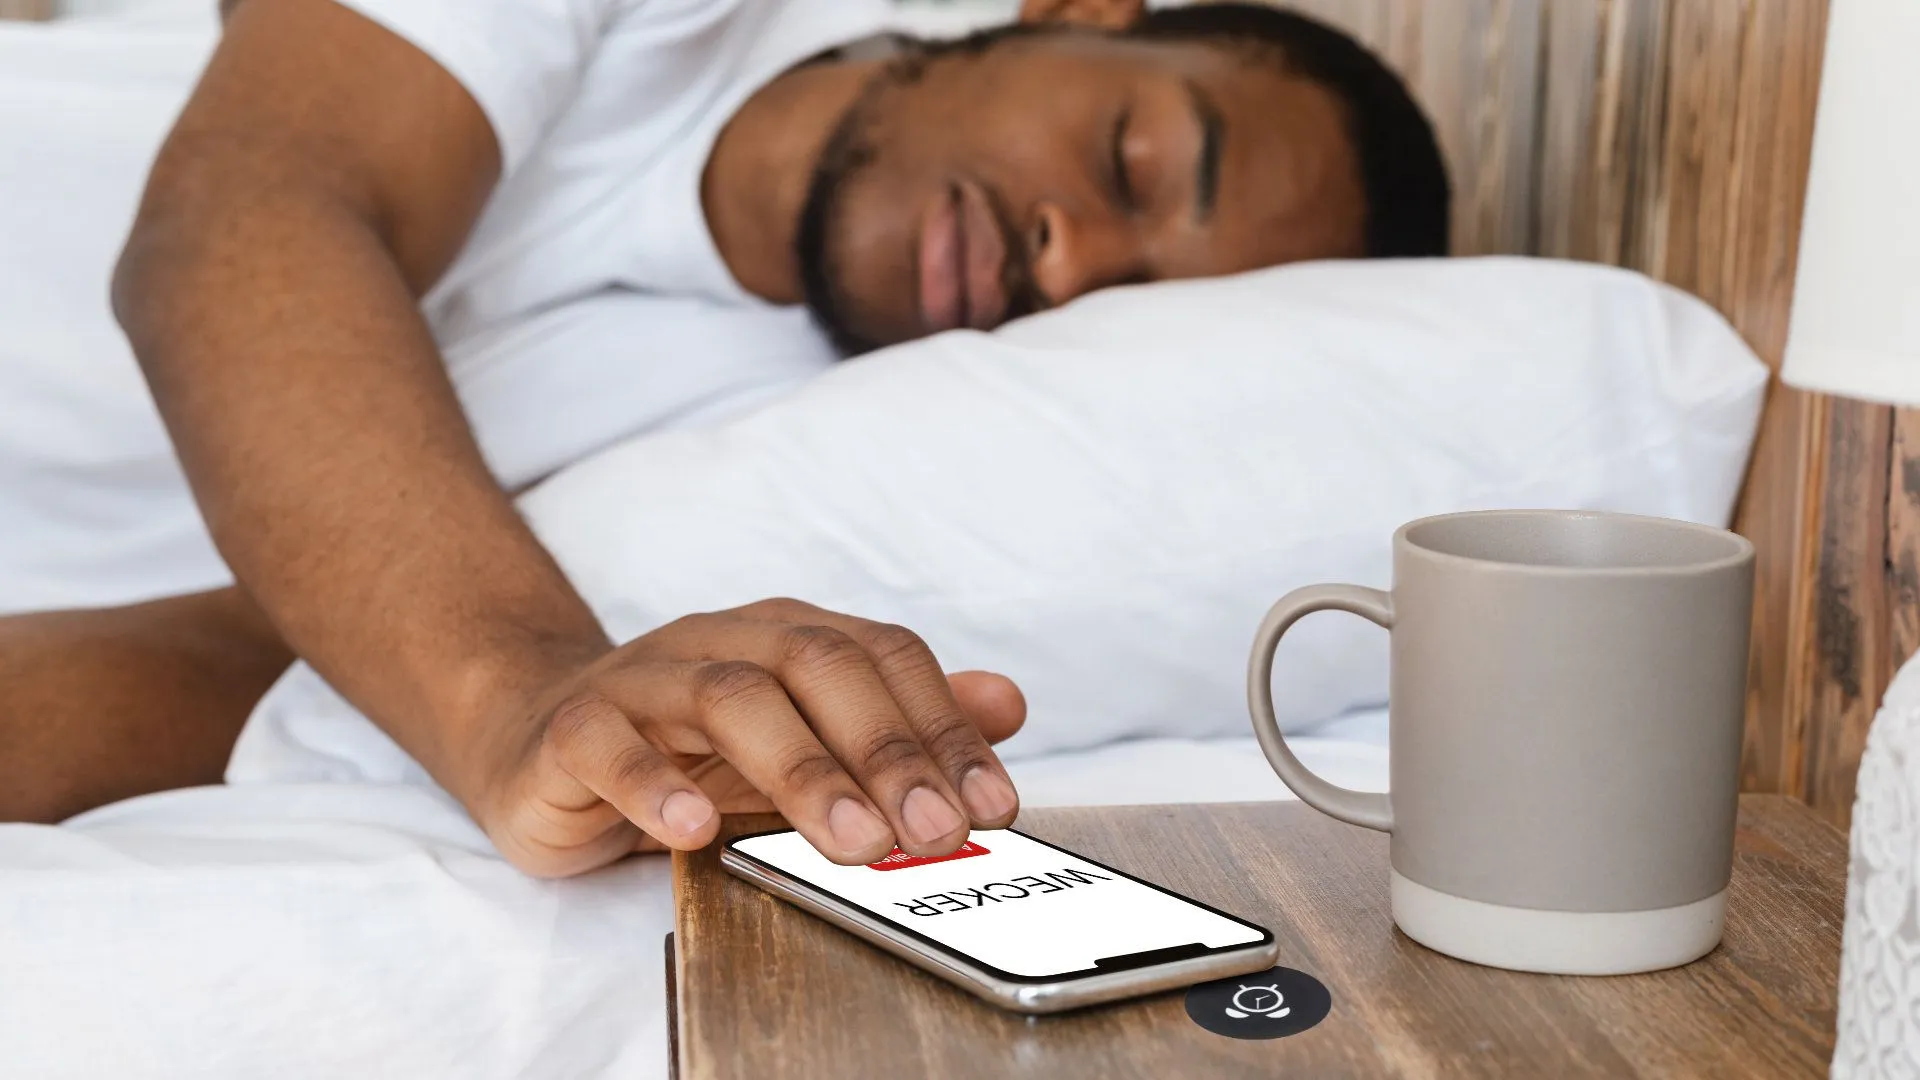 Set alarm clock with NFC tag